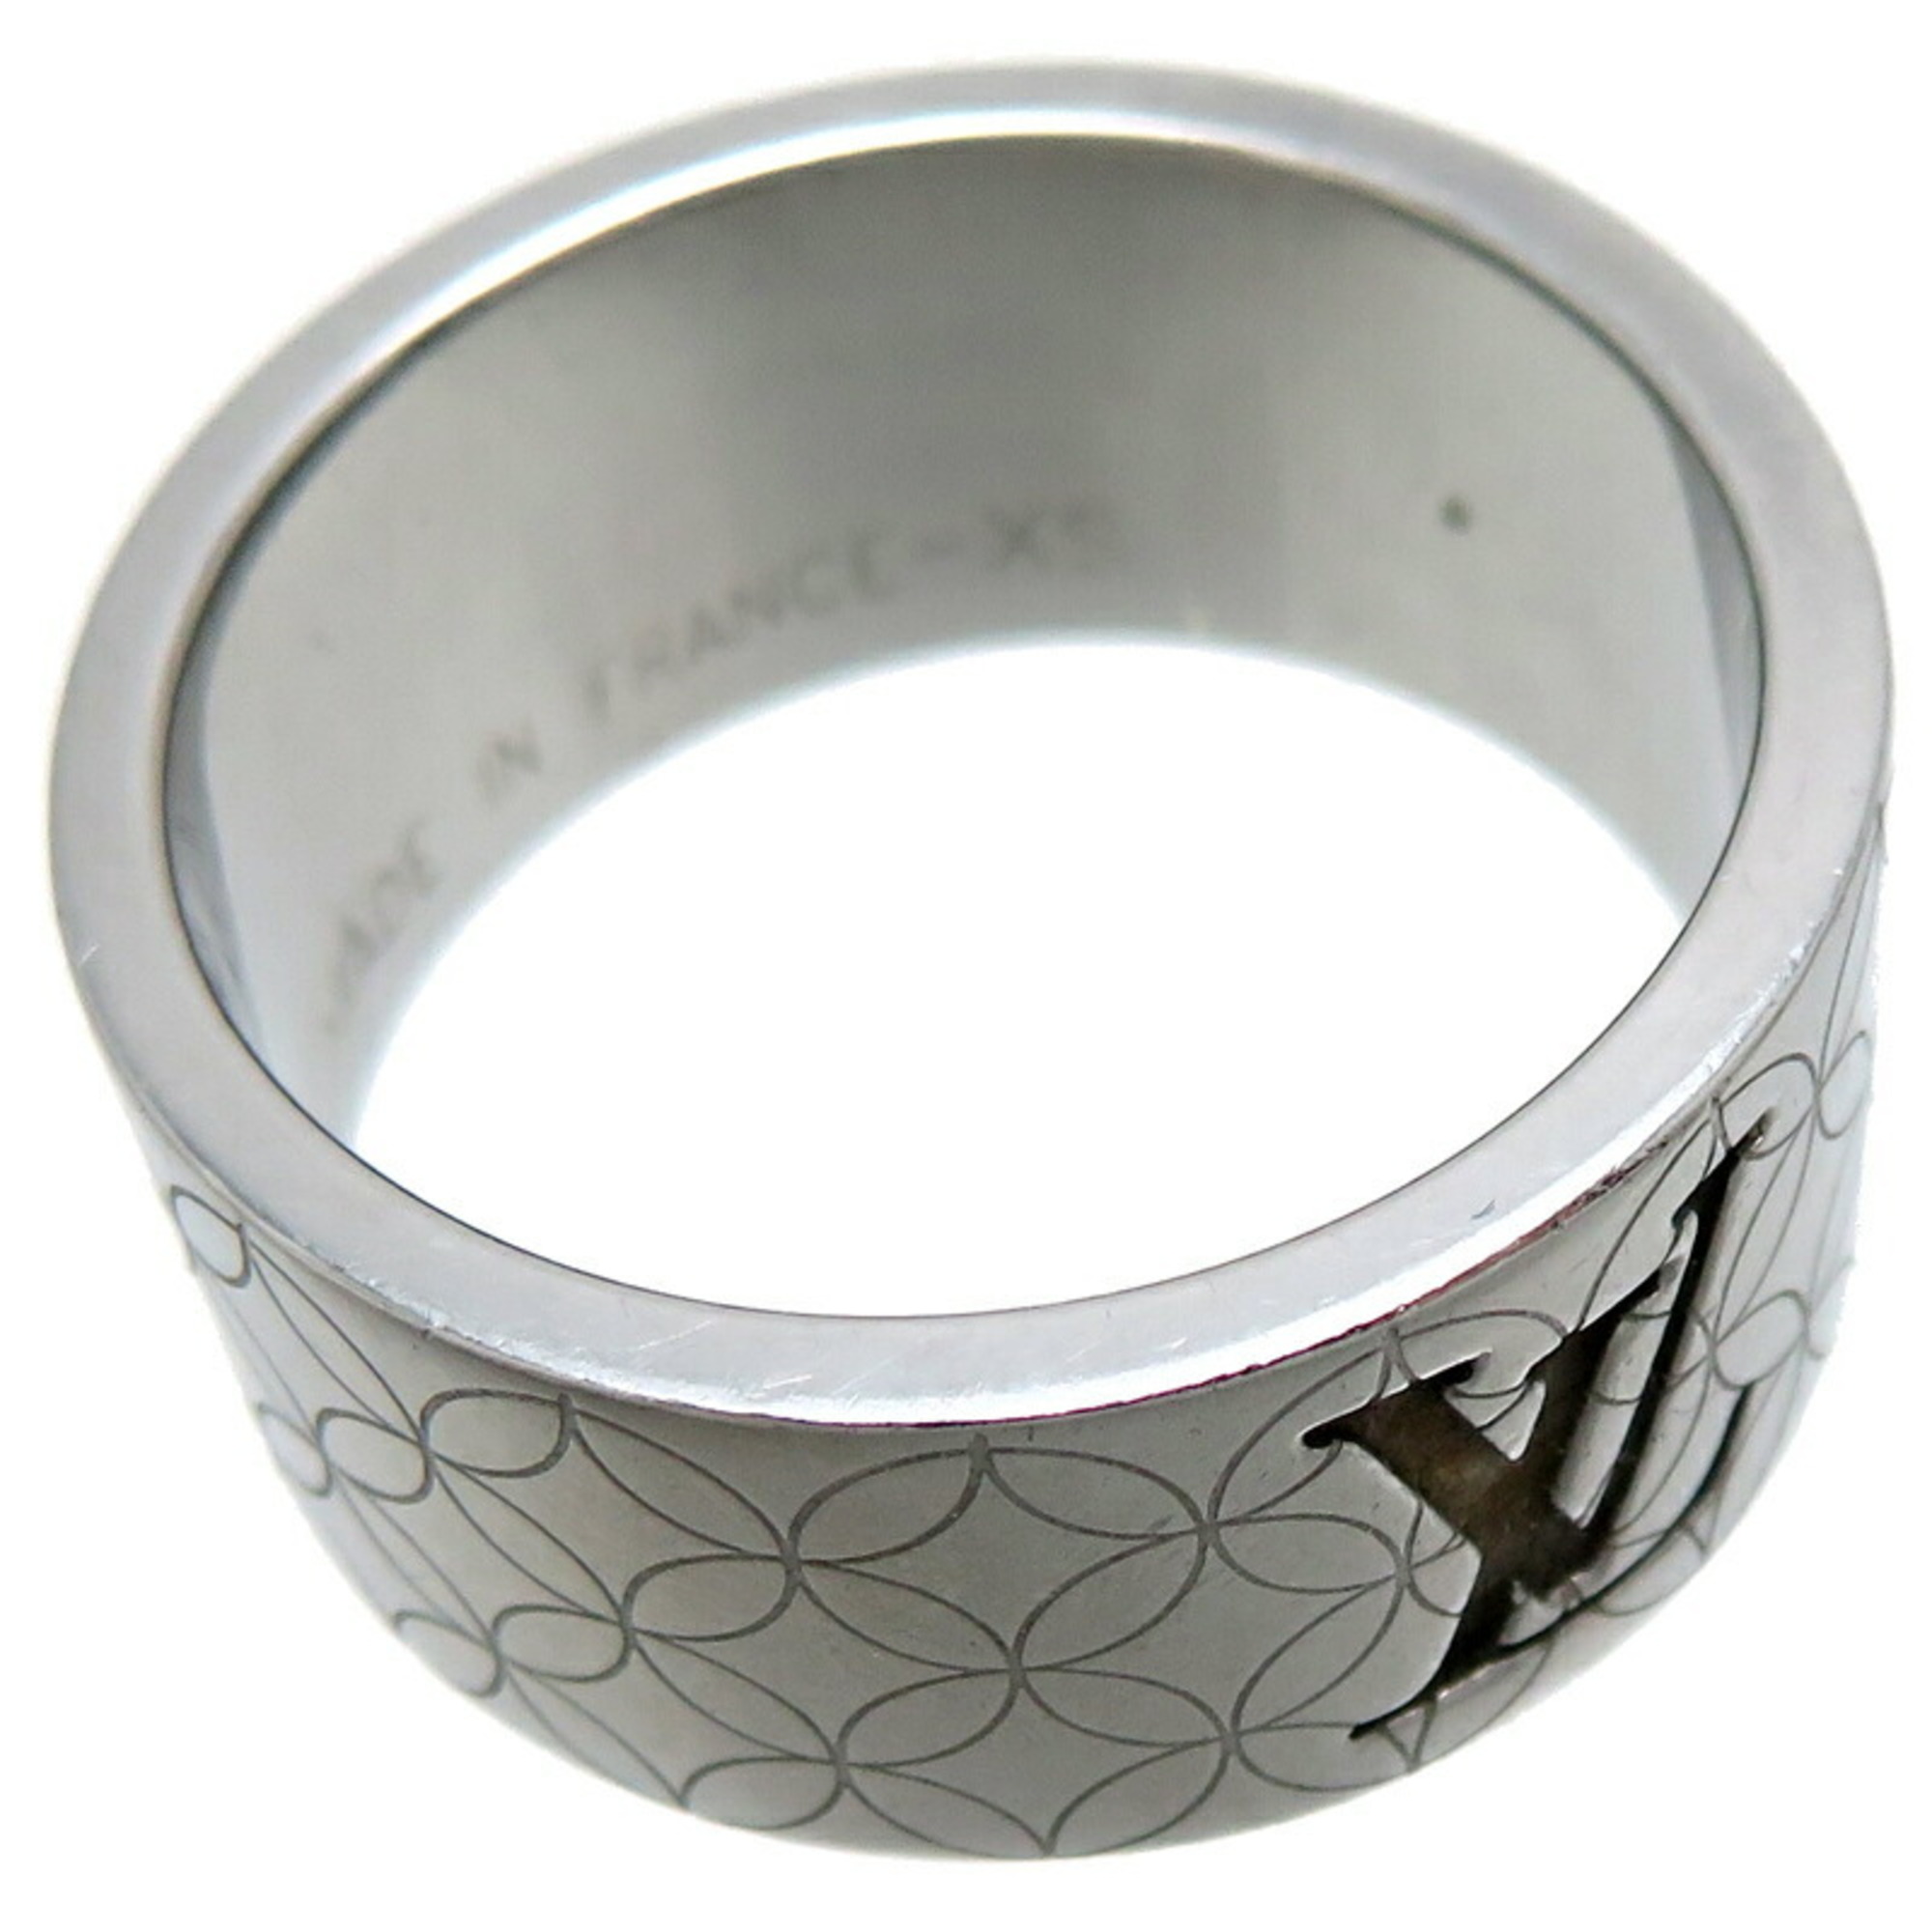 Louis Vuitton #XS Berg Champs Elysees Men's Ring, Metal, Size 16